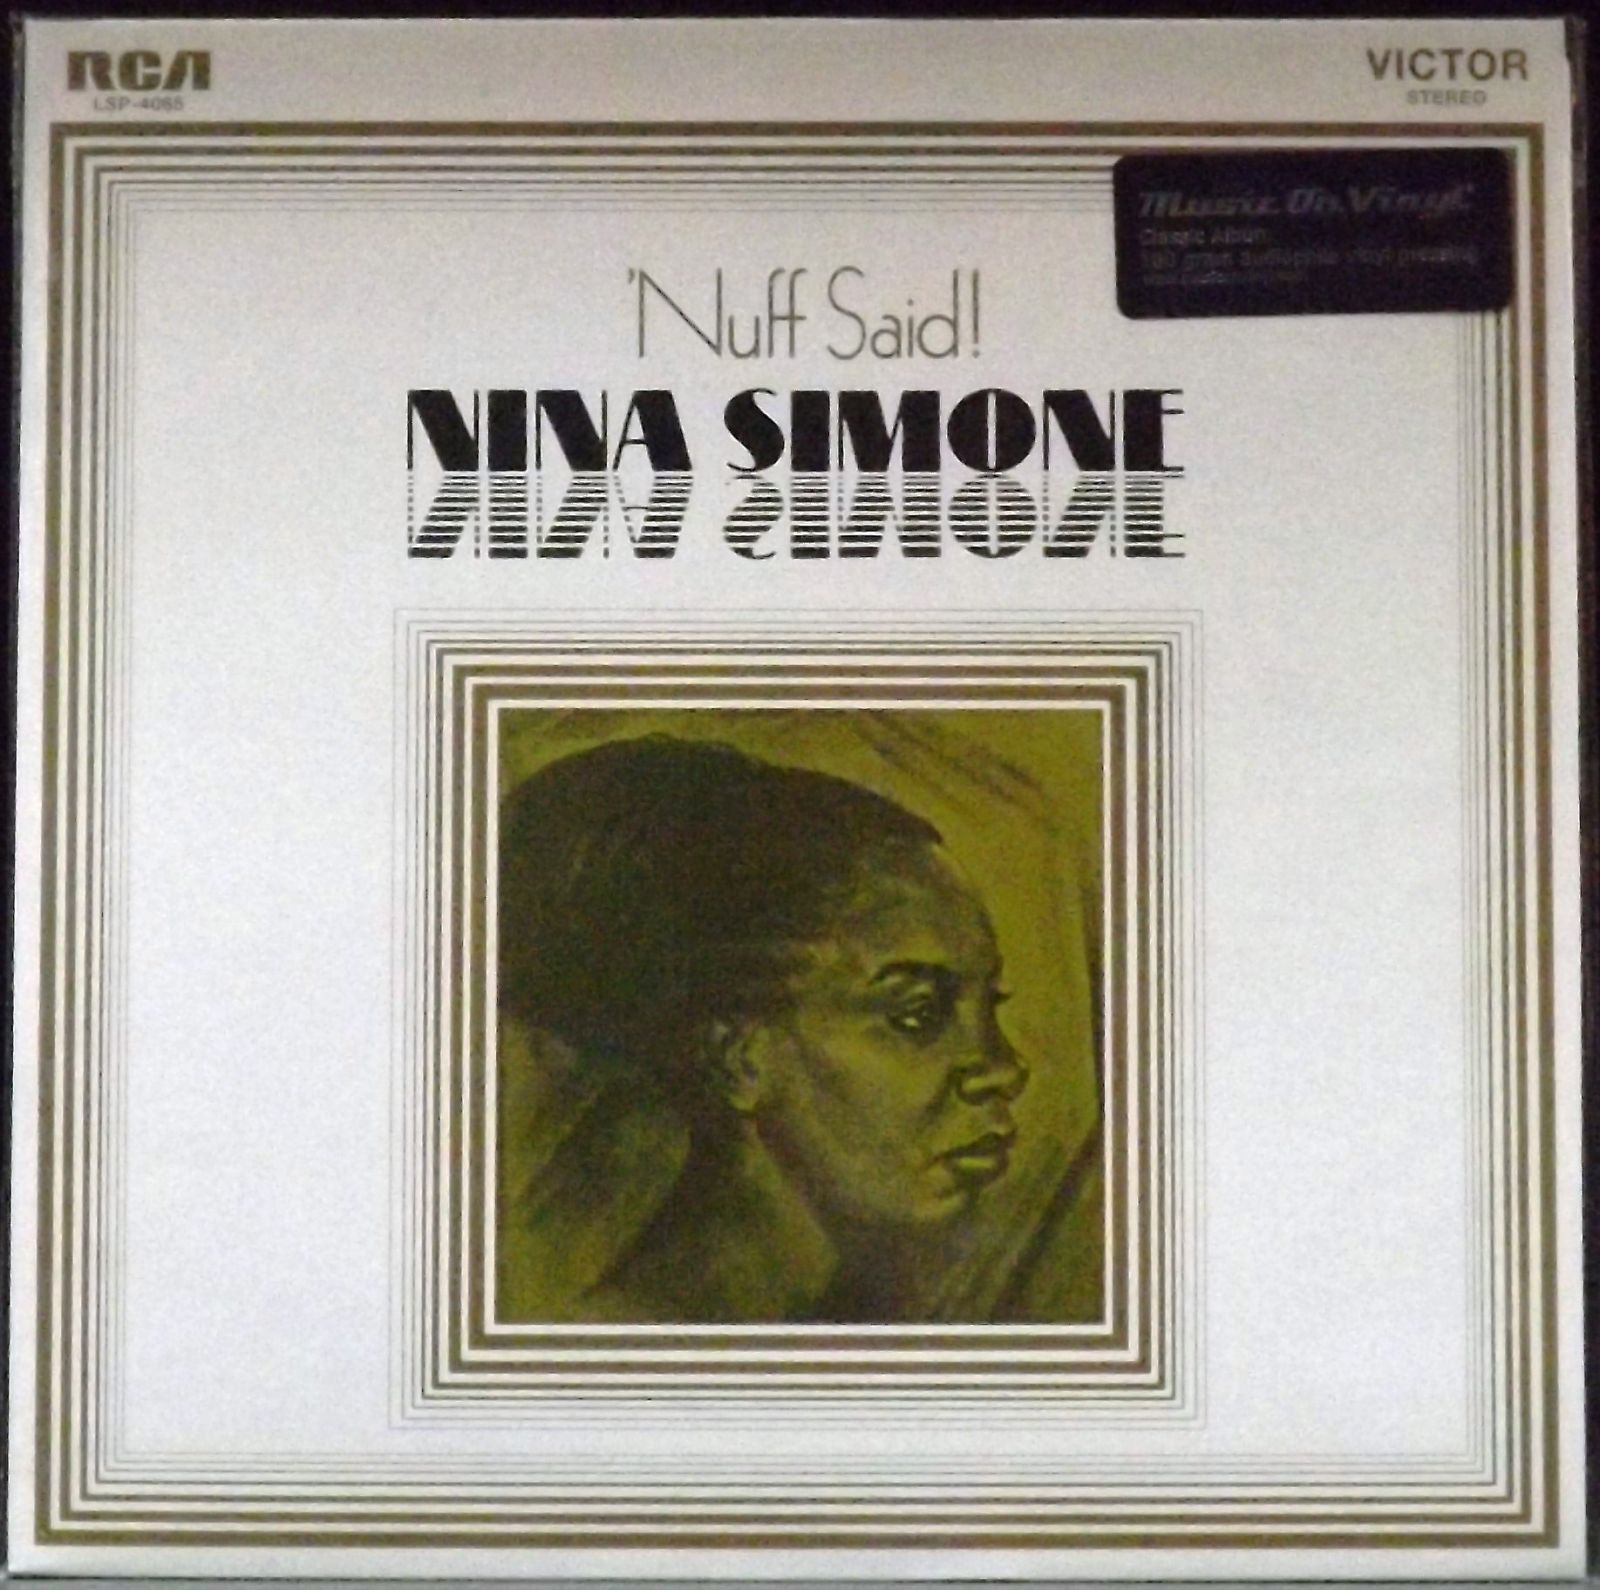 Виниловая пластинка Simone, Nina, Nuff Said! (8718469535248) виниловые пластинки music on vinyl nina simone nuff said lp